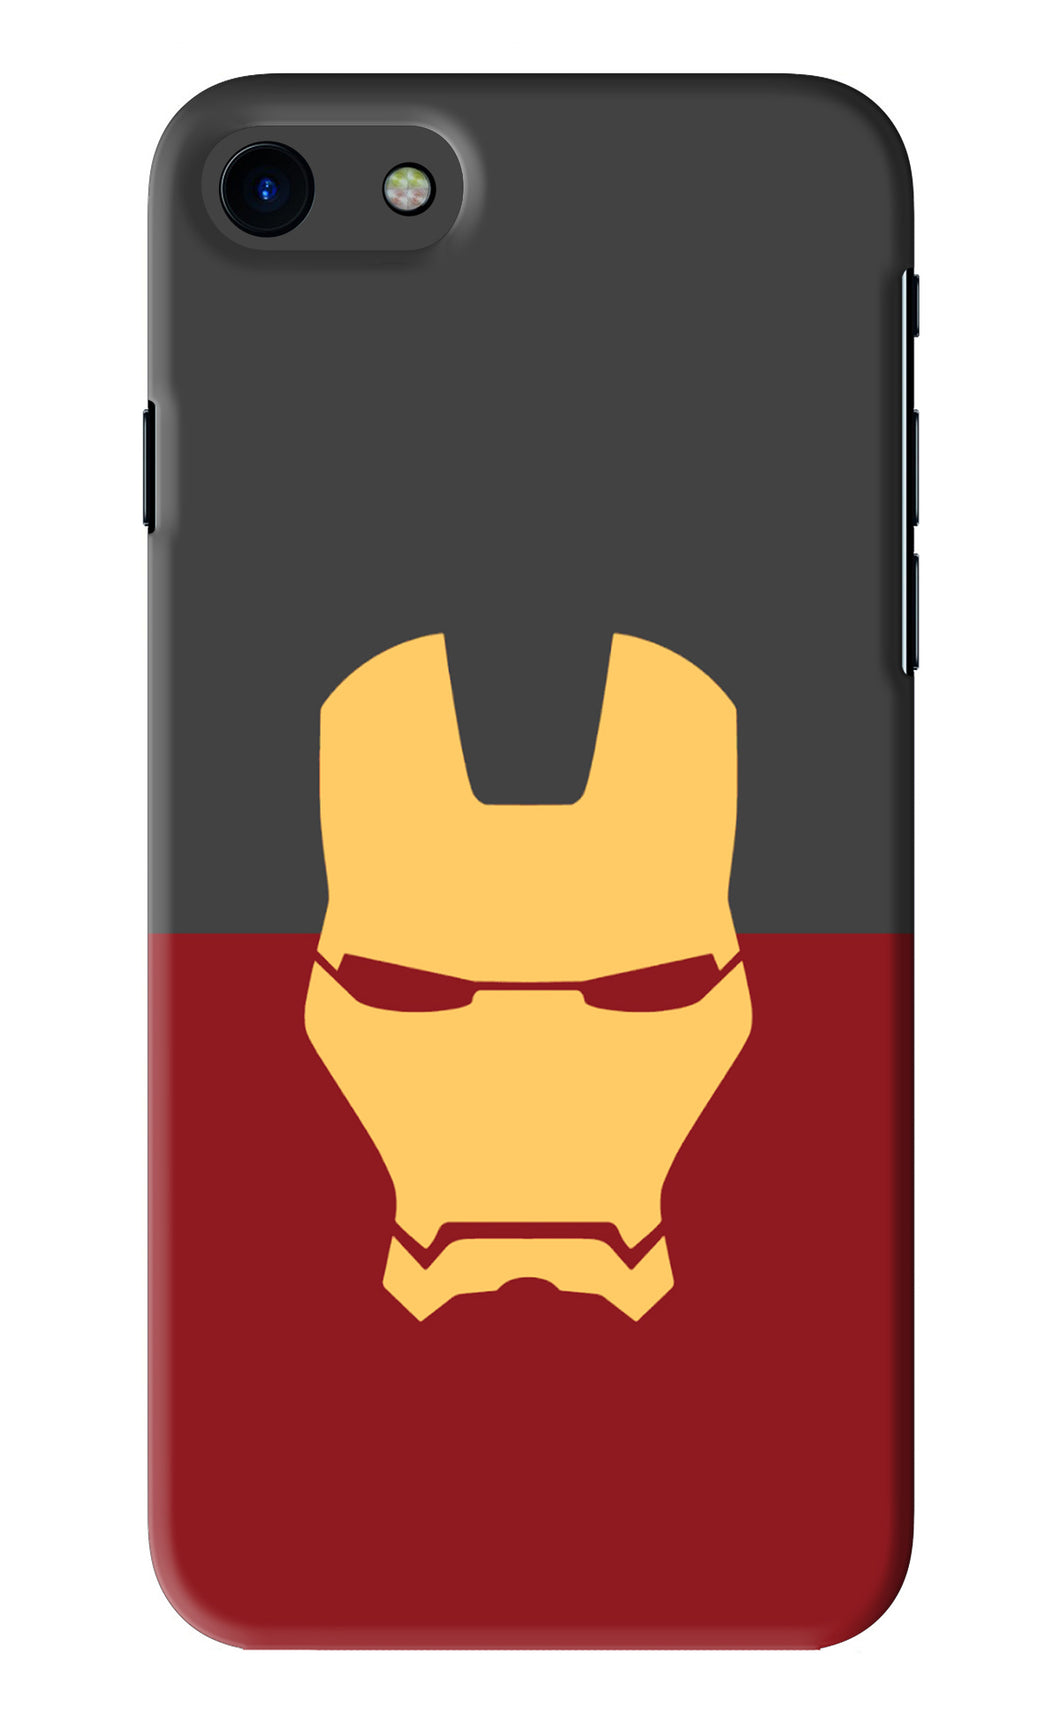 Ironman iPhone SE 2020 Back Skin Wrap